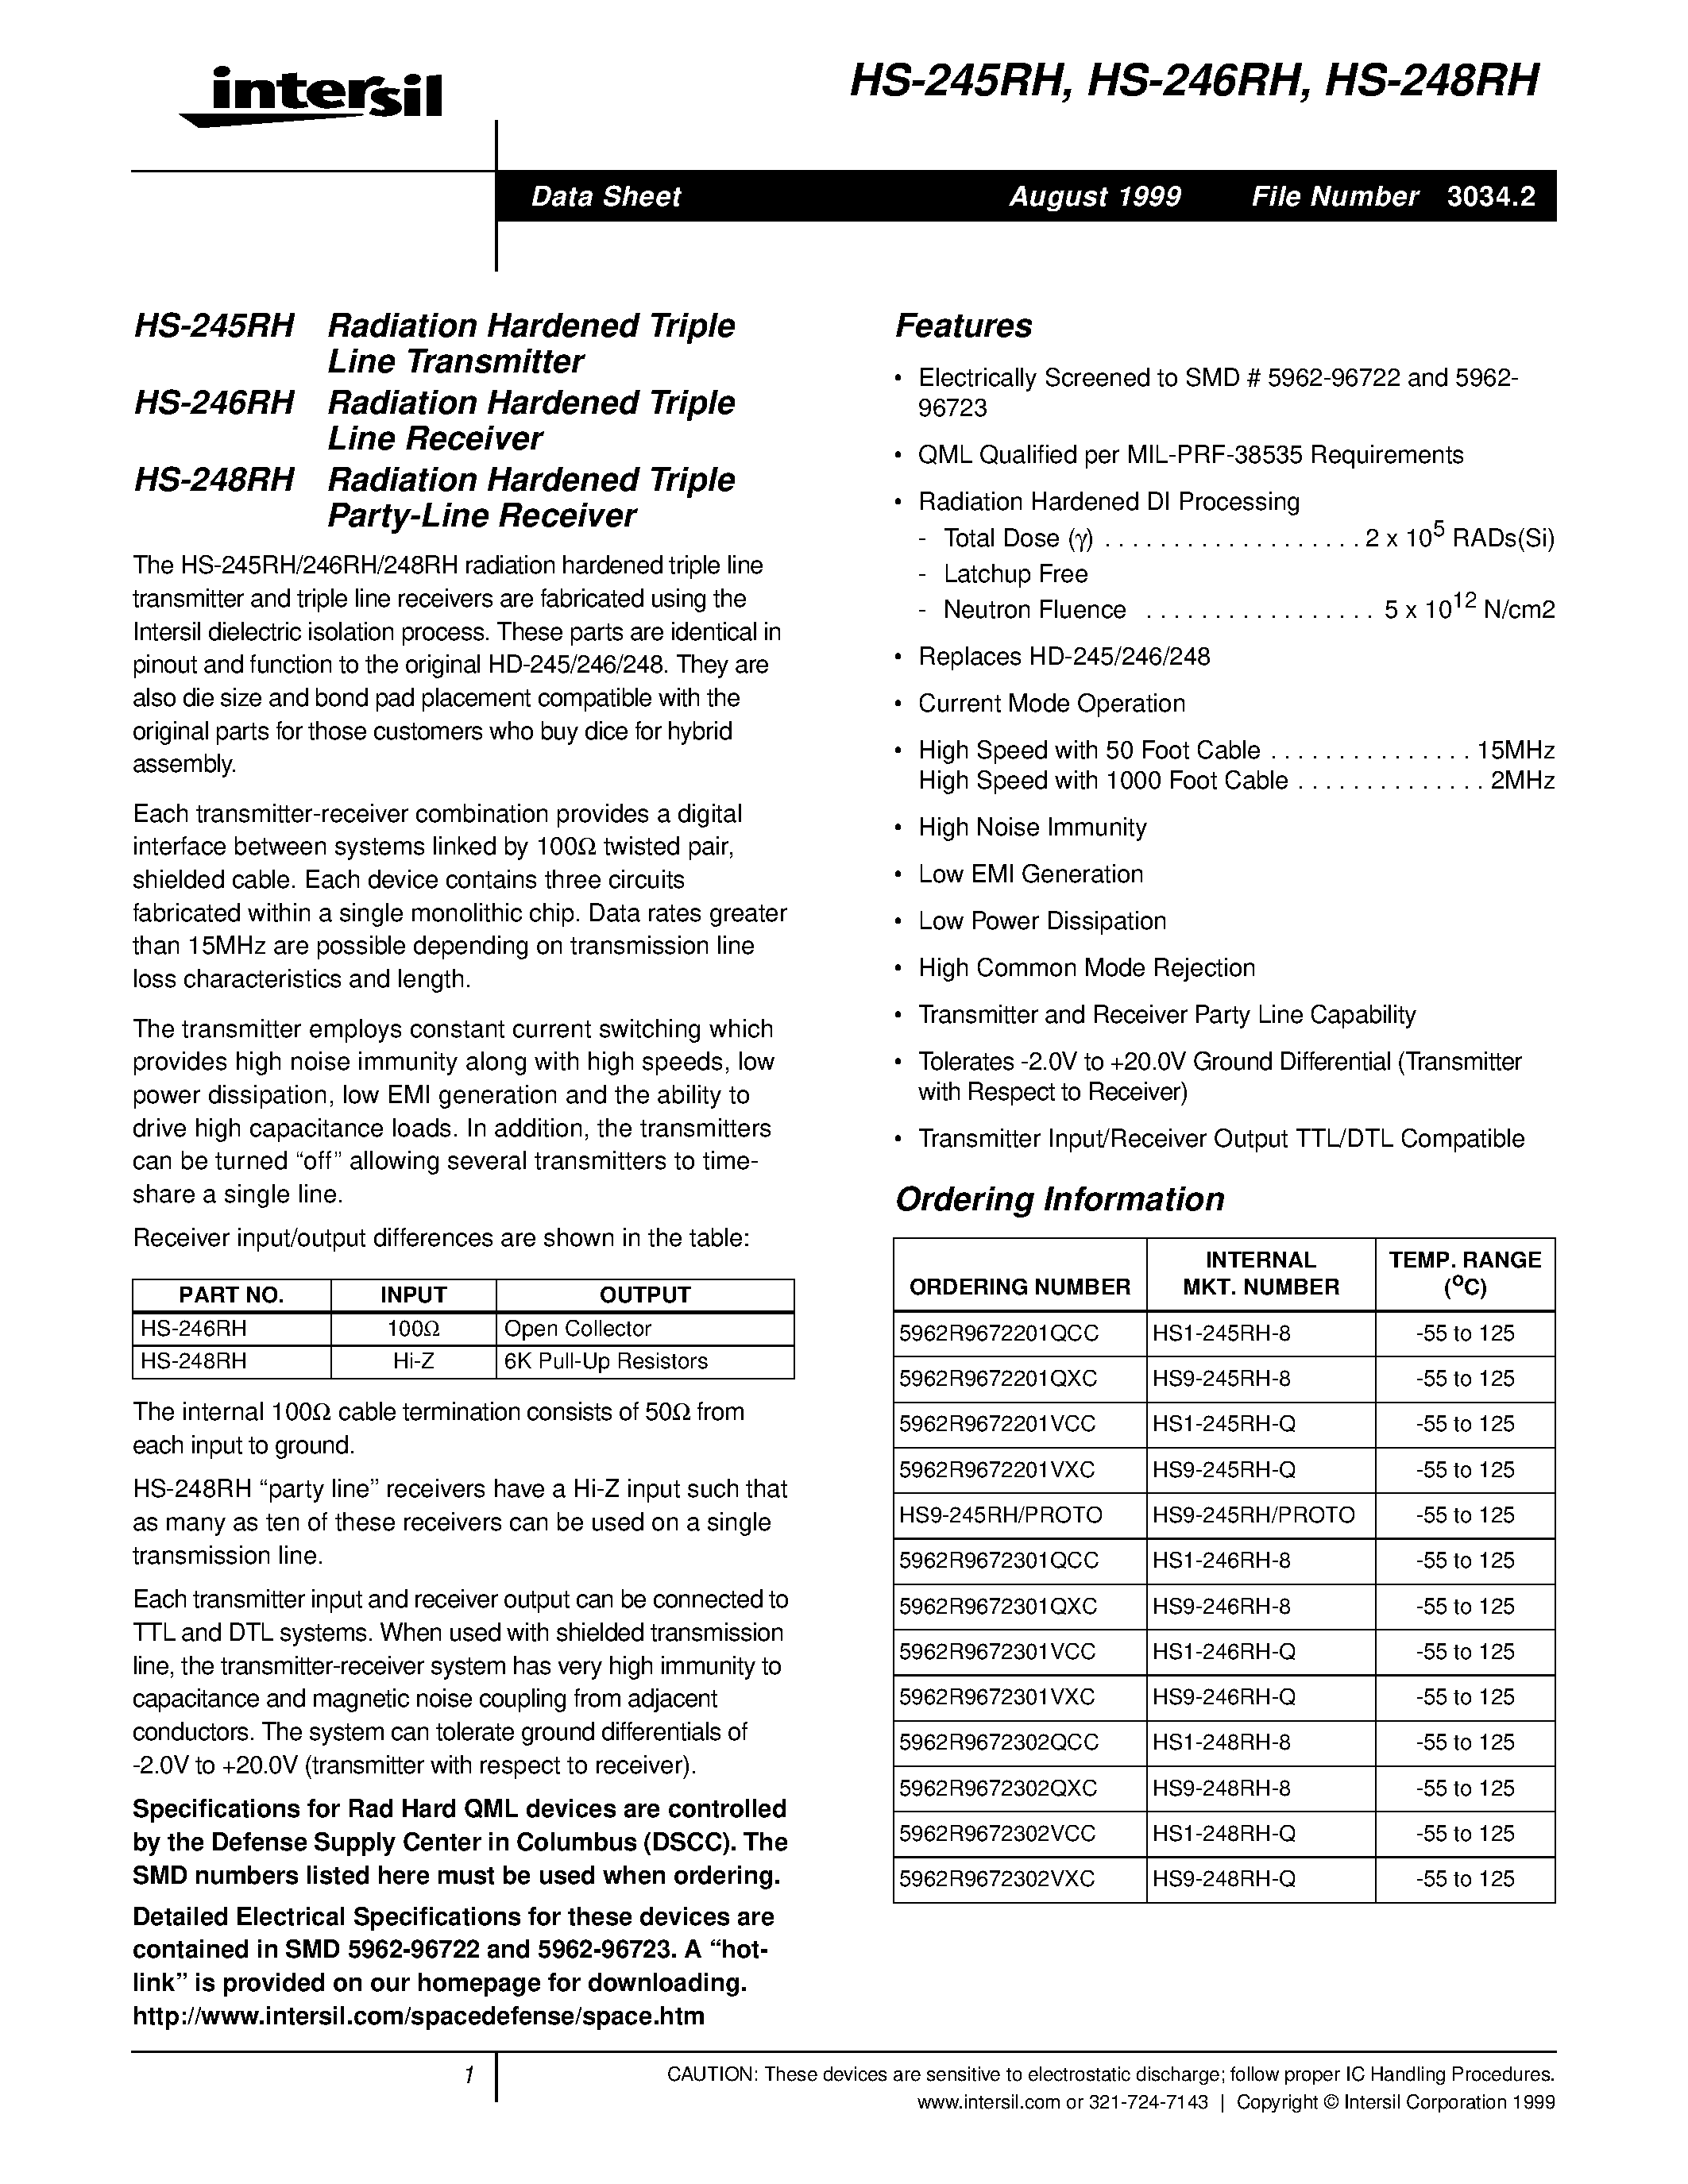 Даташит HS1-248RH-Q - Radiation Hardened Triple Line(party-Line) Transmitter страница 1